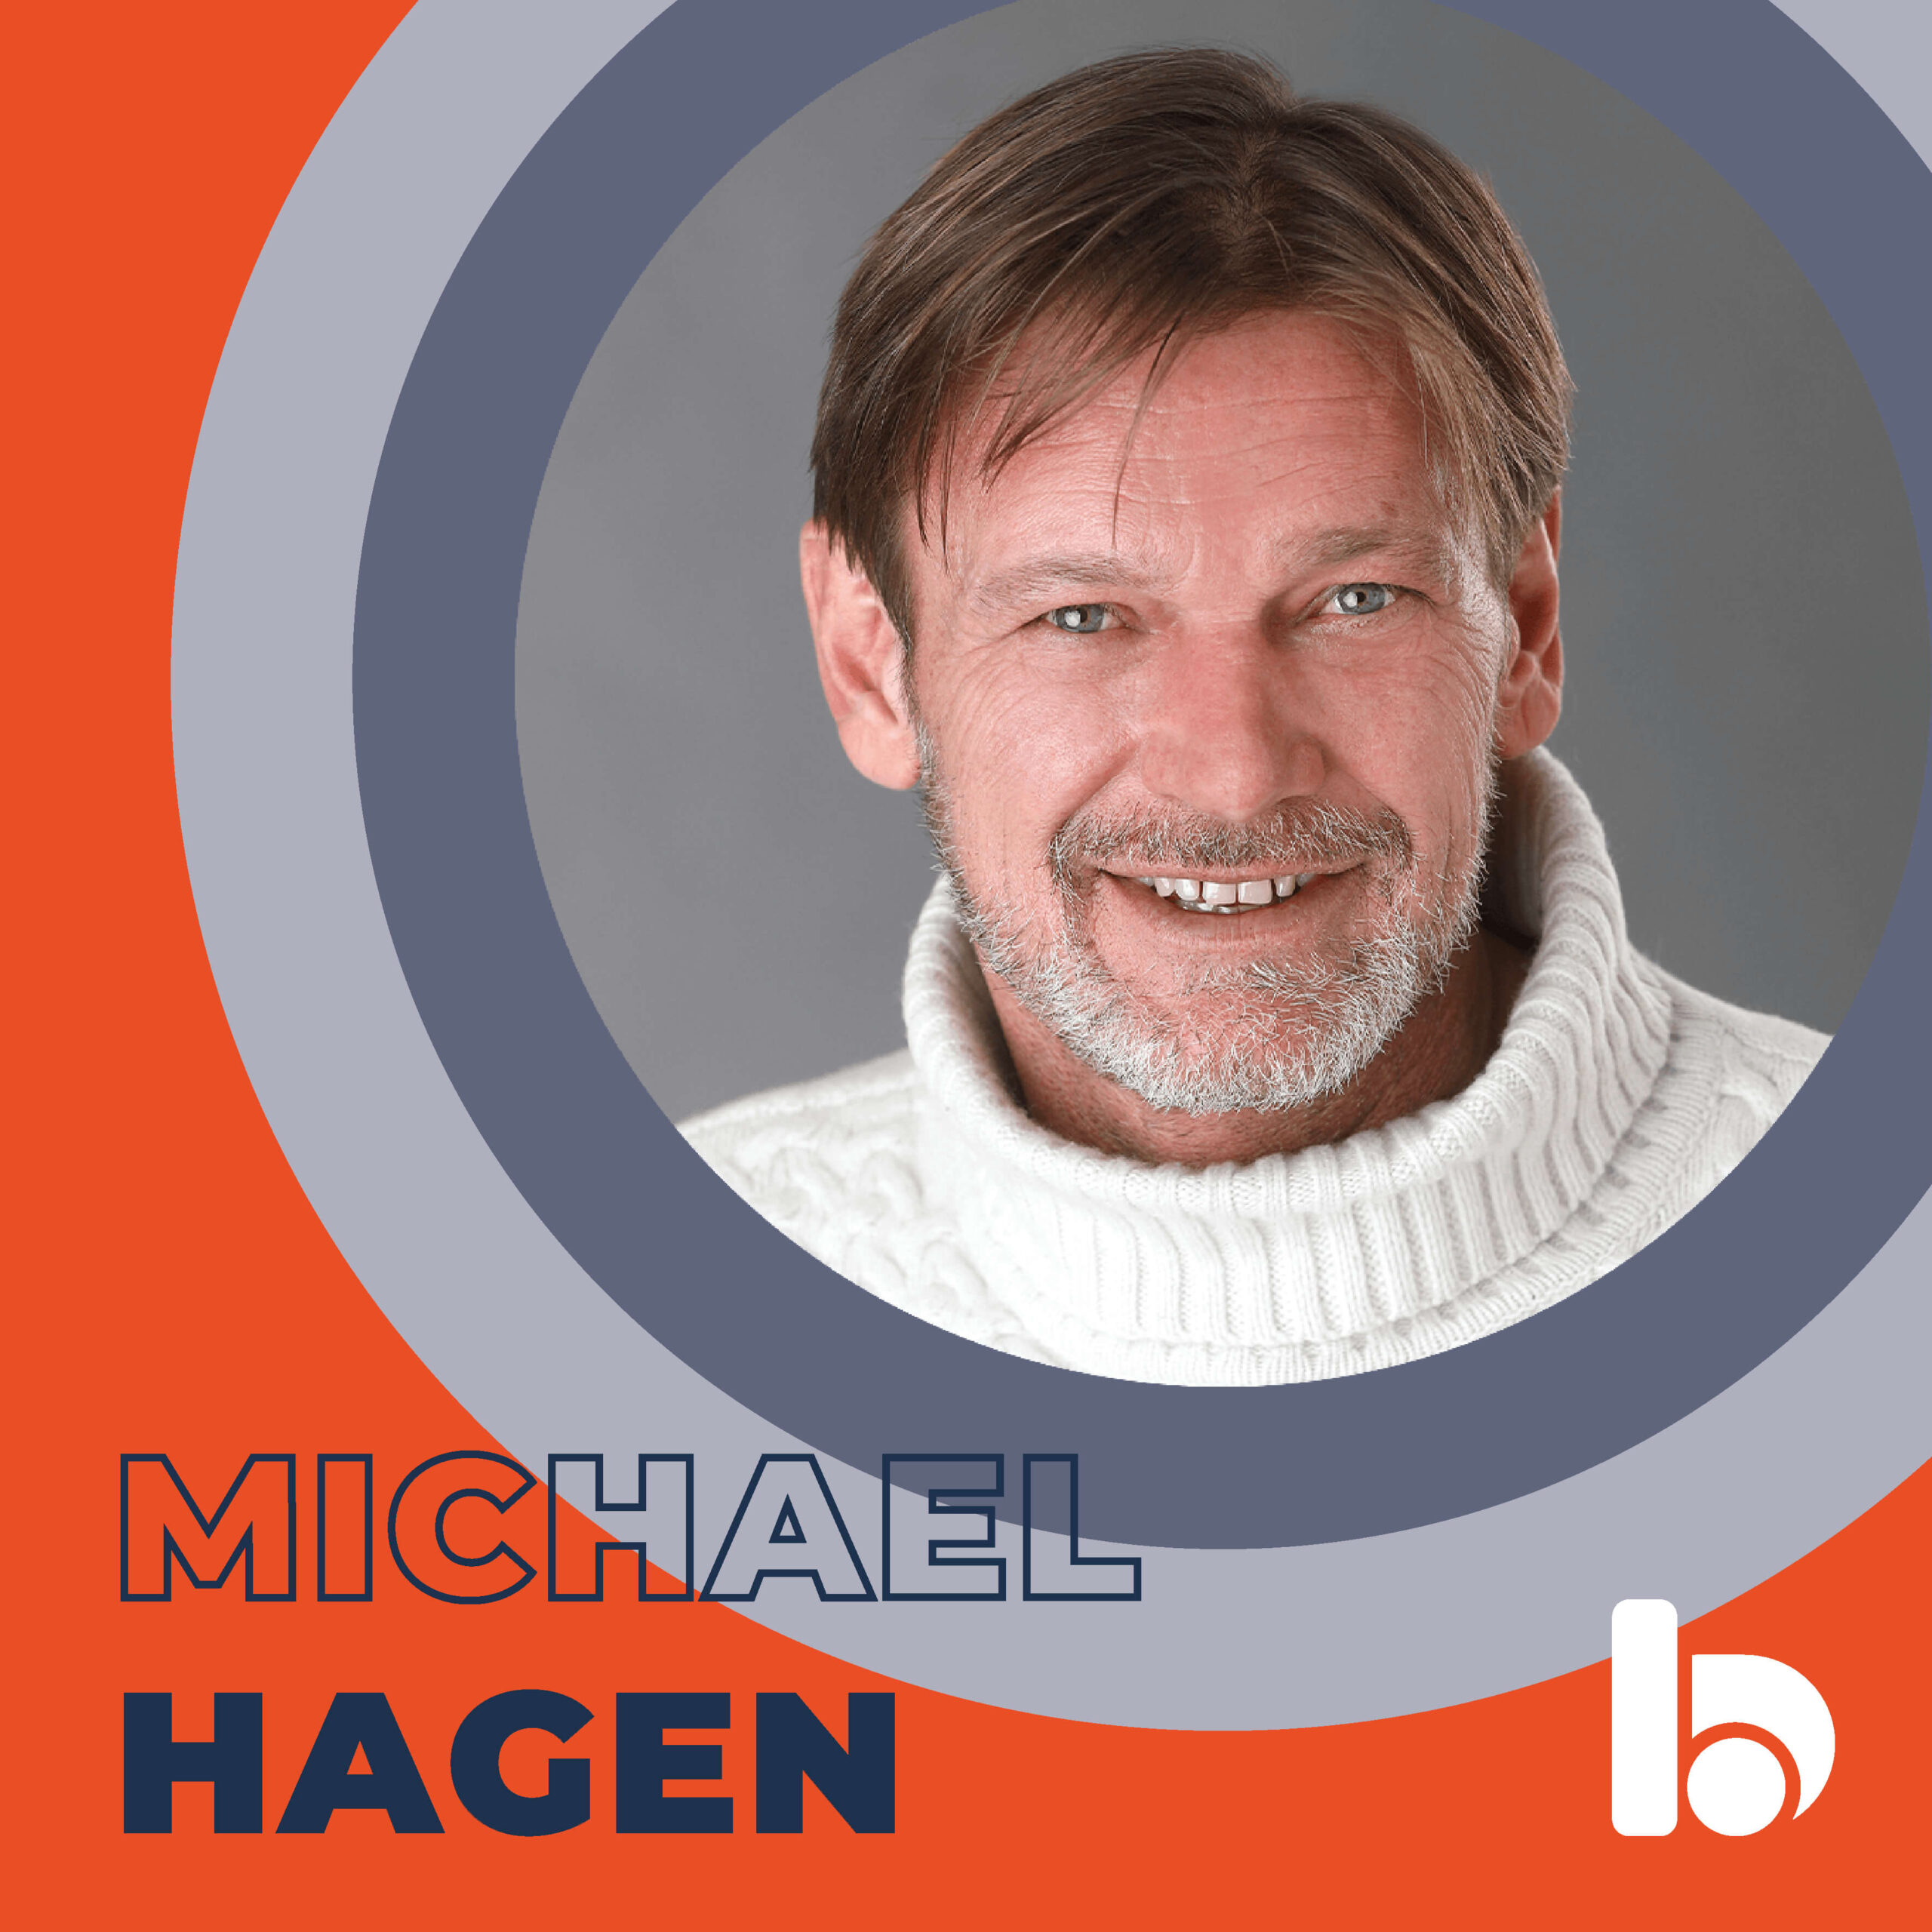 #BENSEGGEREMPLOYEE: MICHAEL HAGN